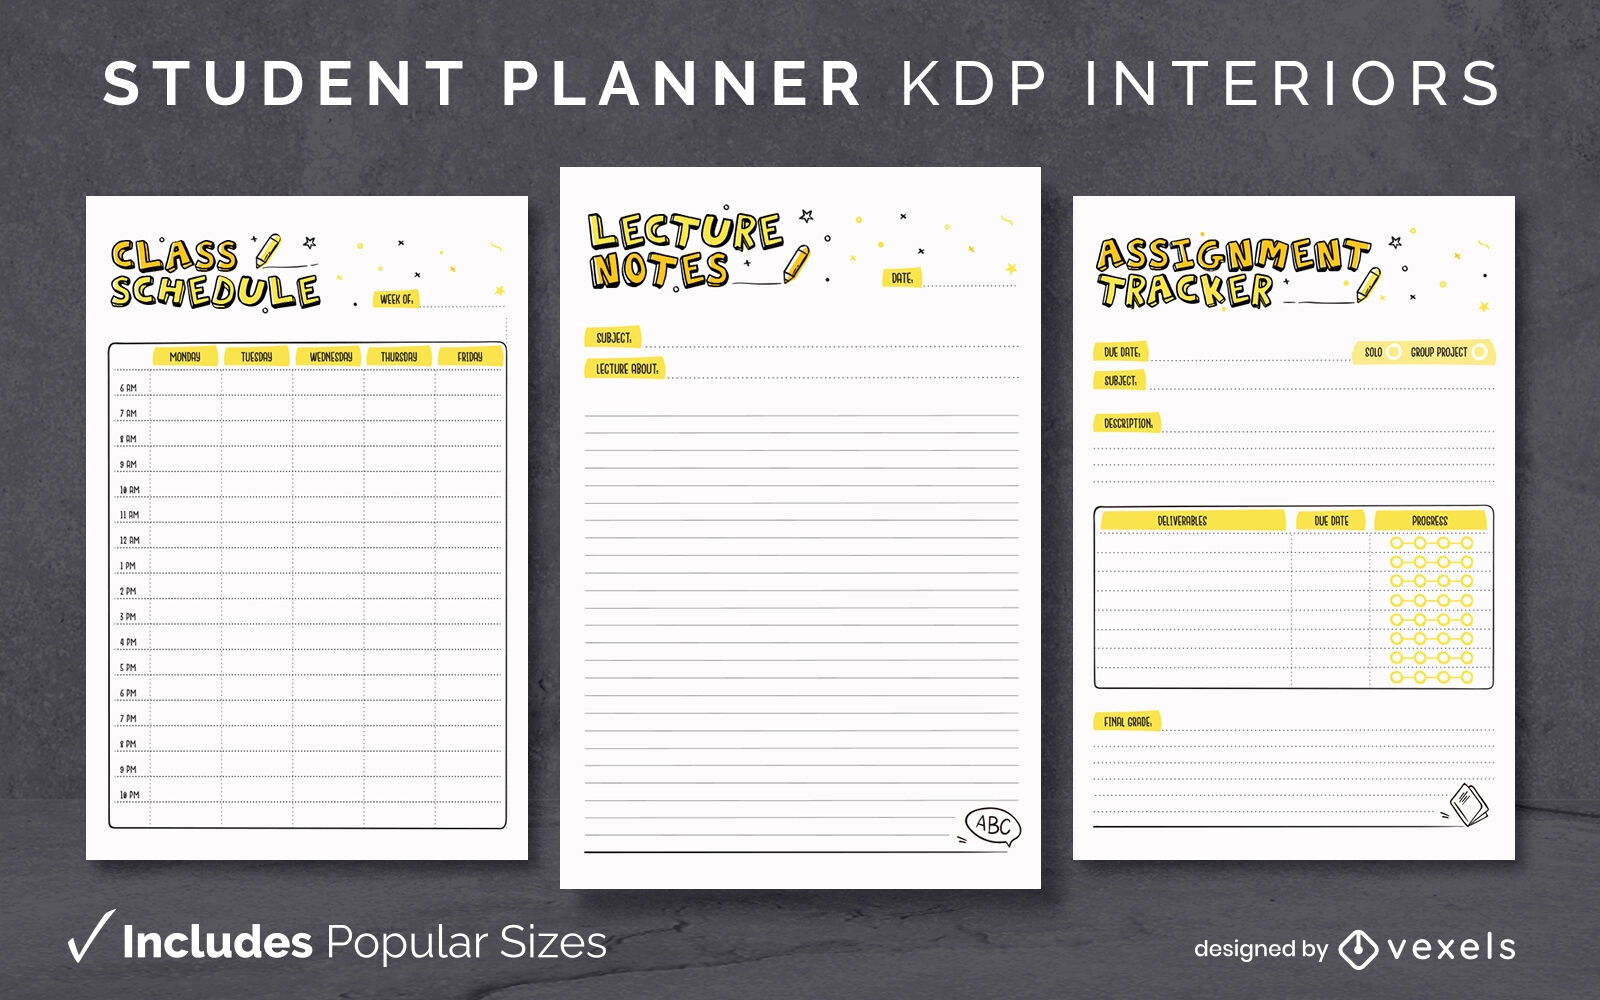 Student planner KDP interior template